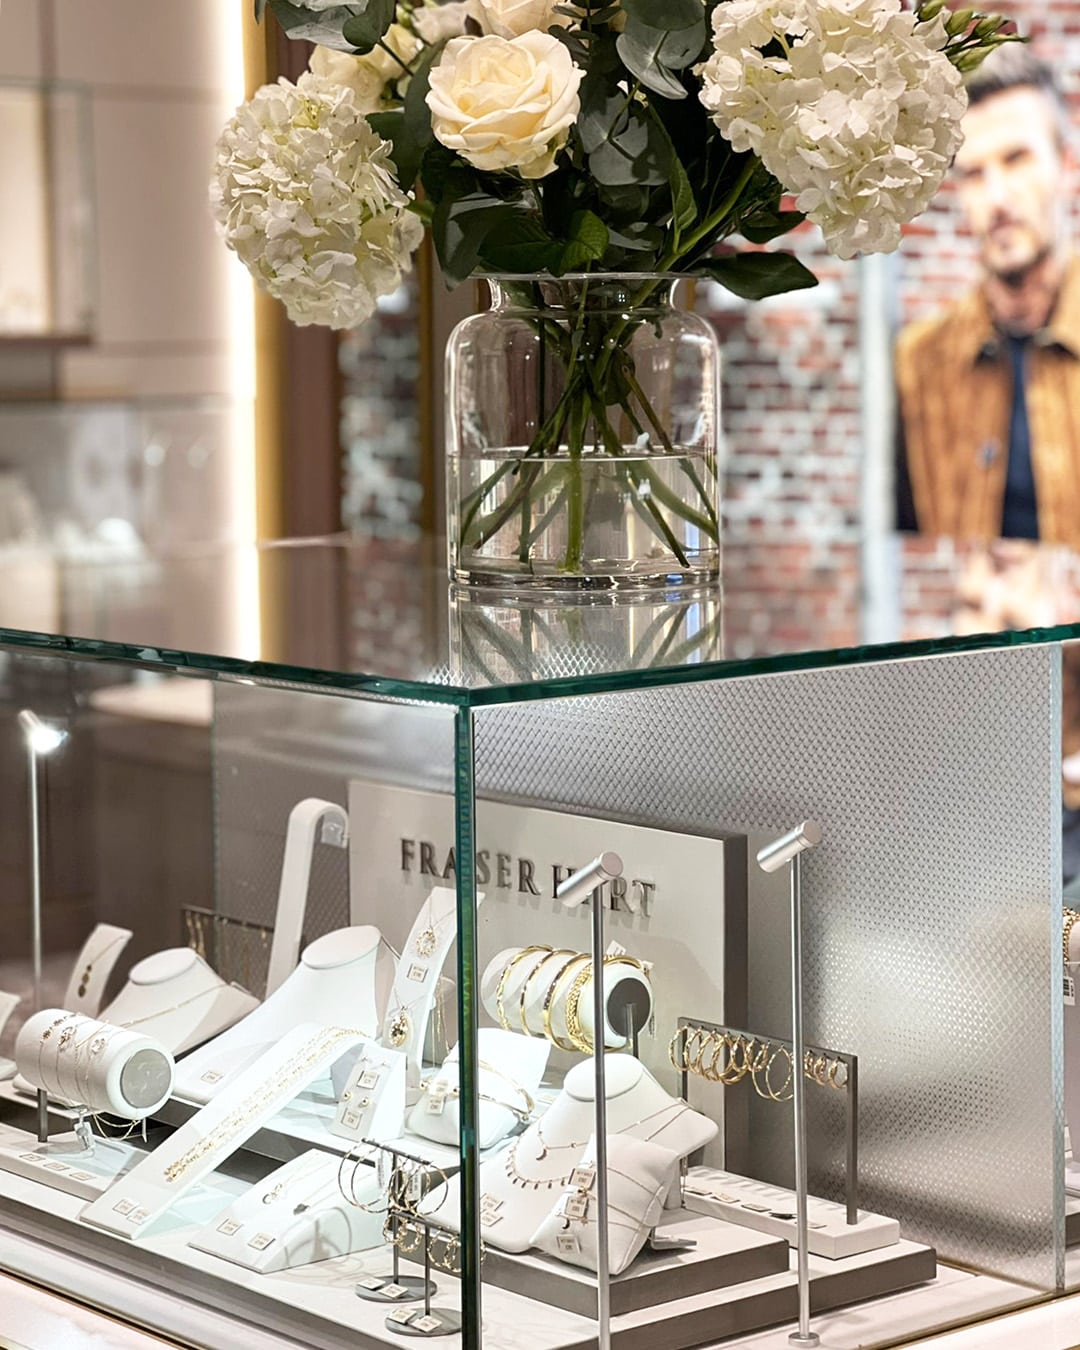 fraser hart luxury jewellry shopfitting glass display case